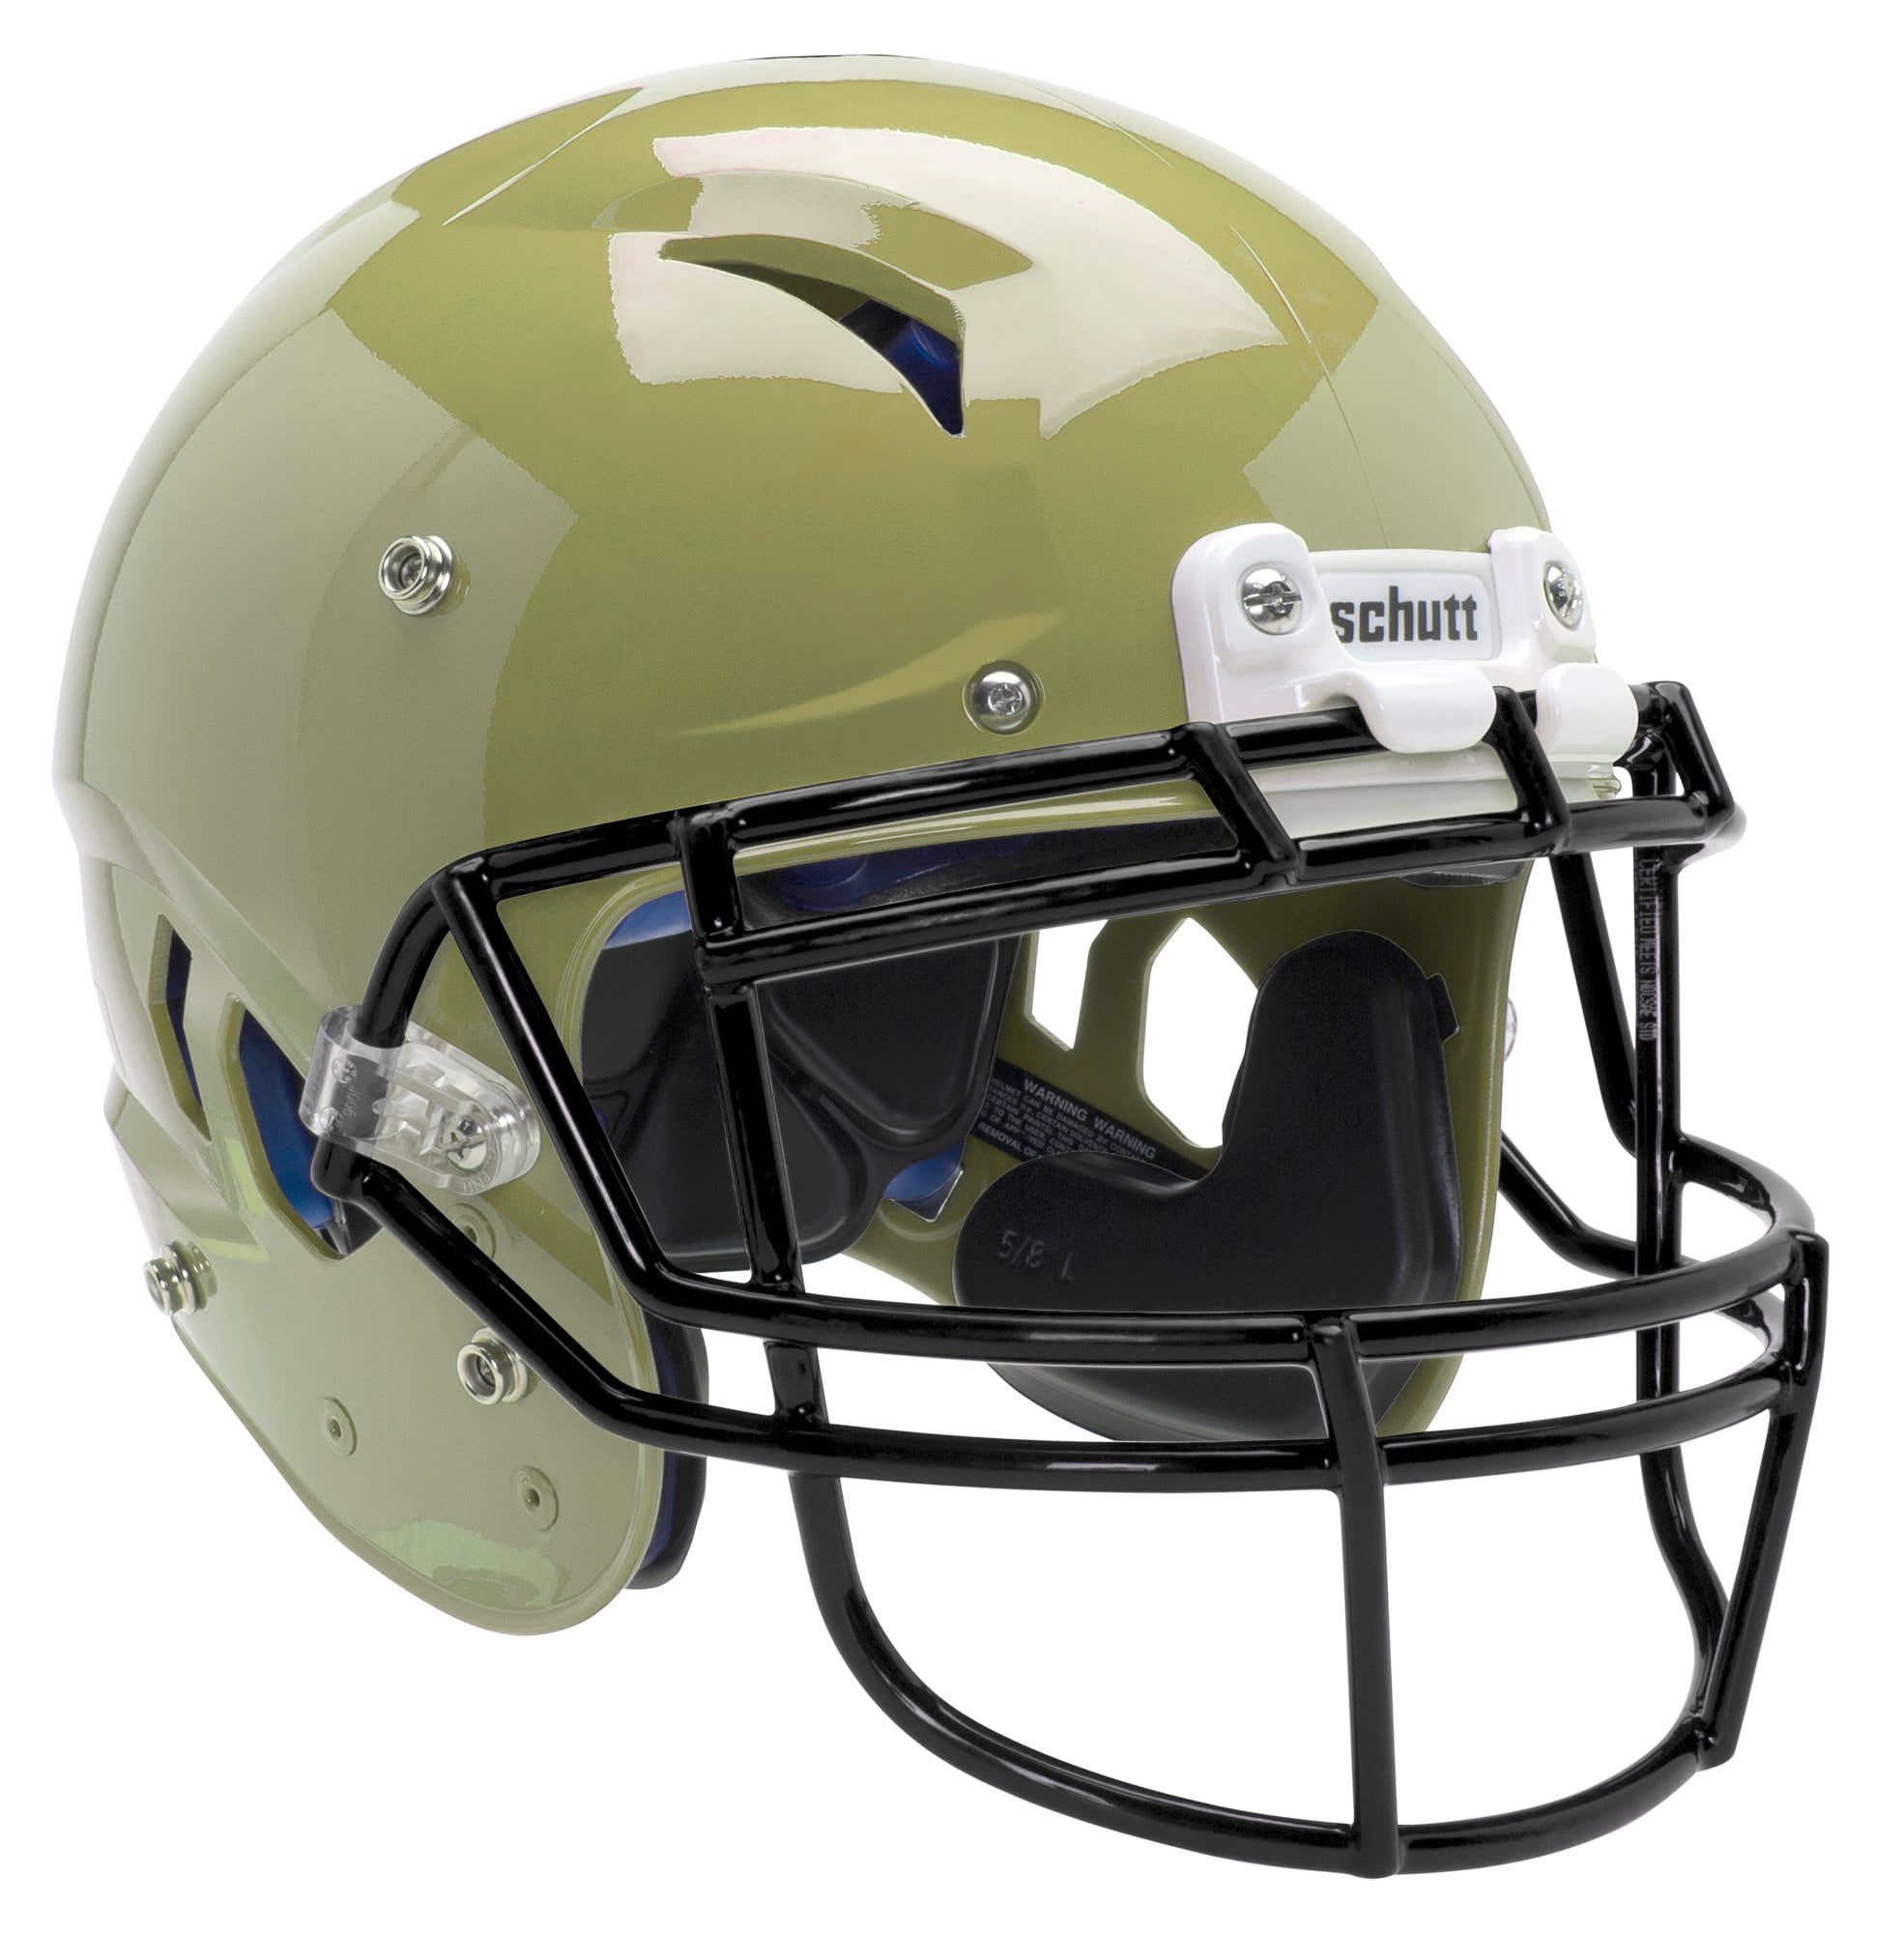 New Schutt 2019 Vengeance Pro Adult Football Helmet With Facemask 